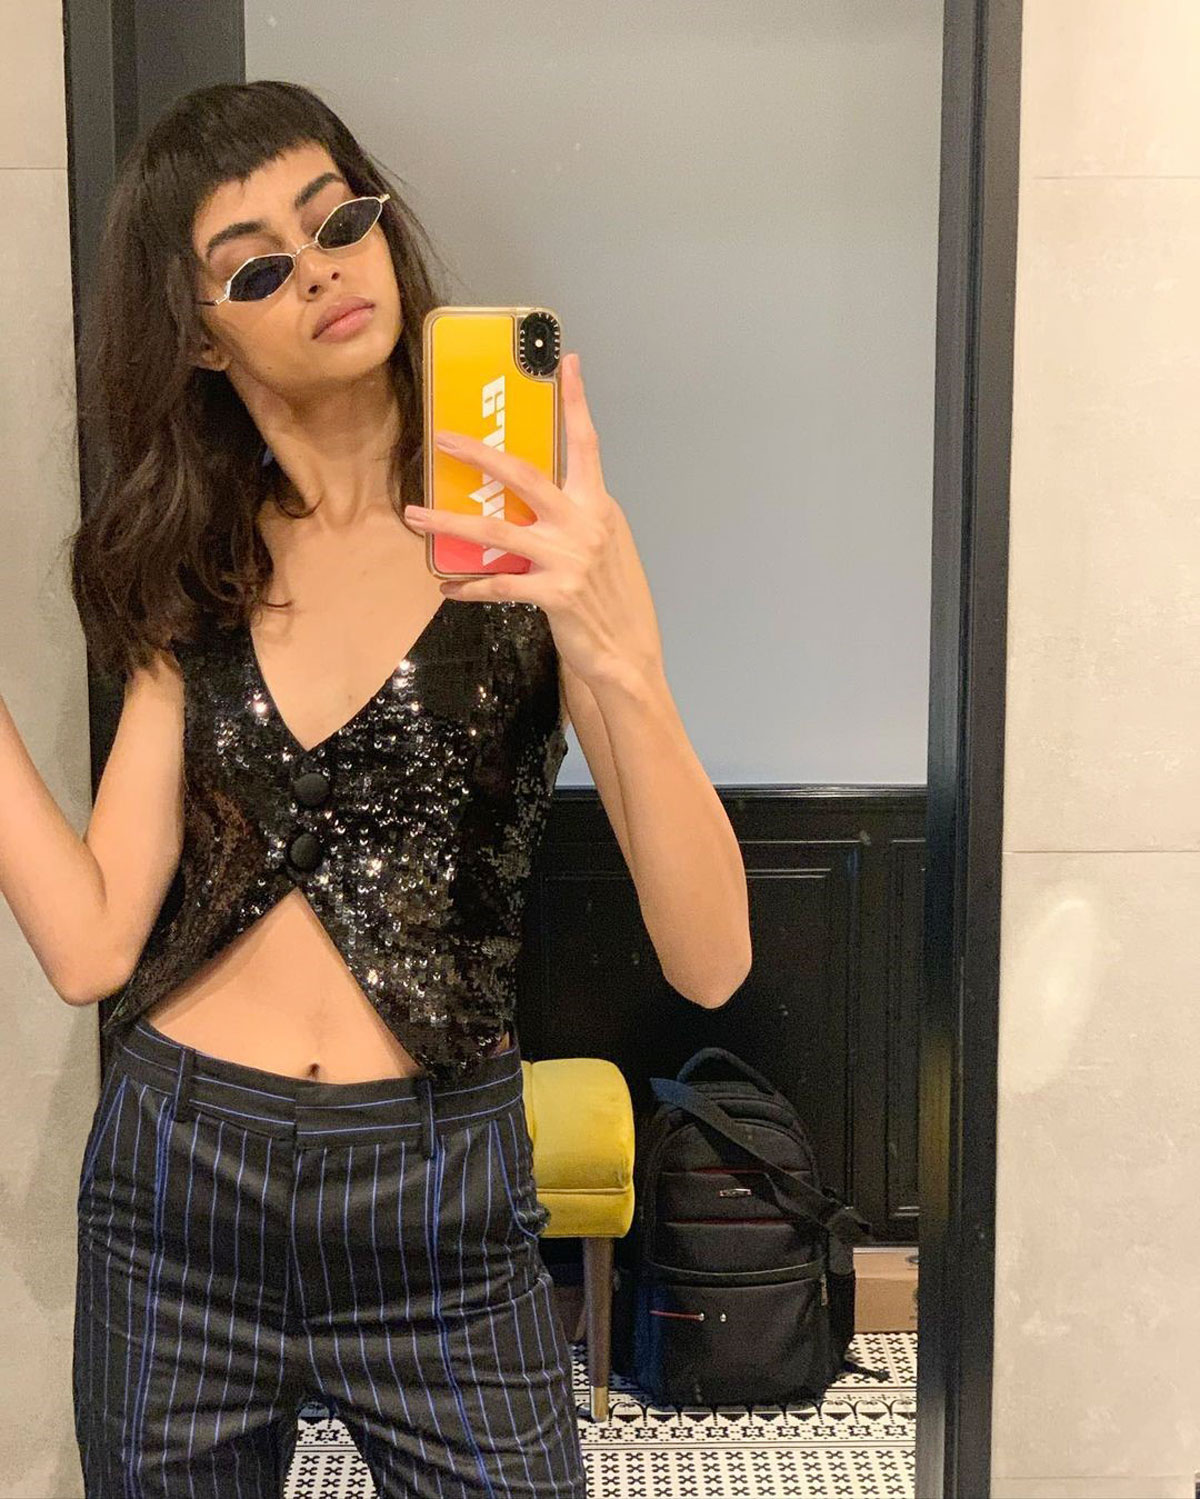 Selfie Masti Time For India's Top Models - Rediff.com